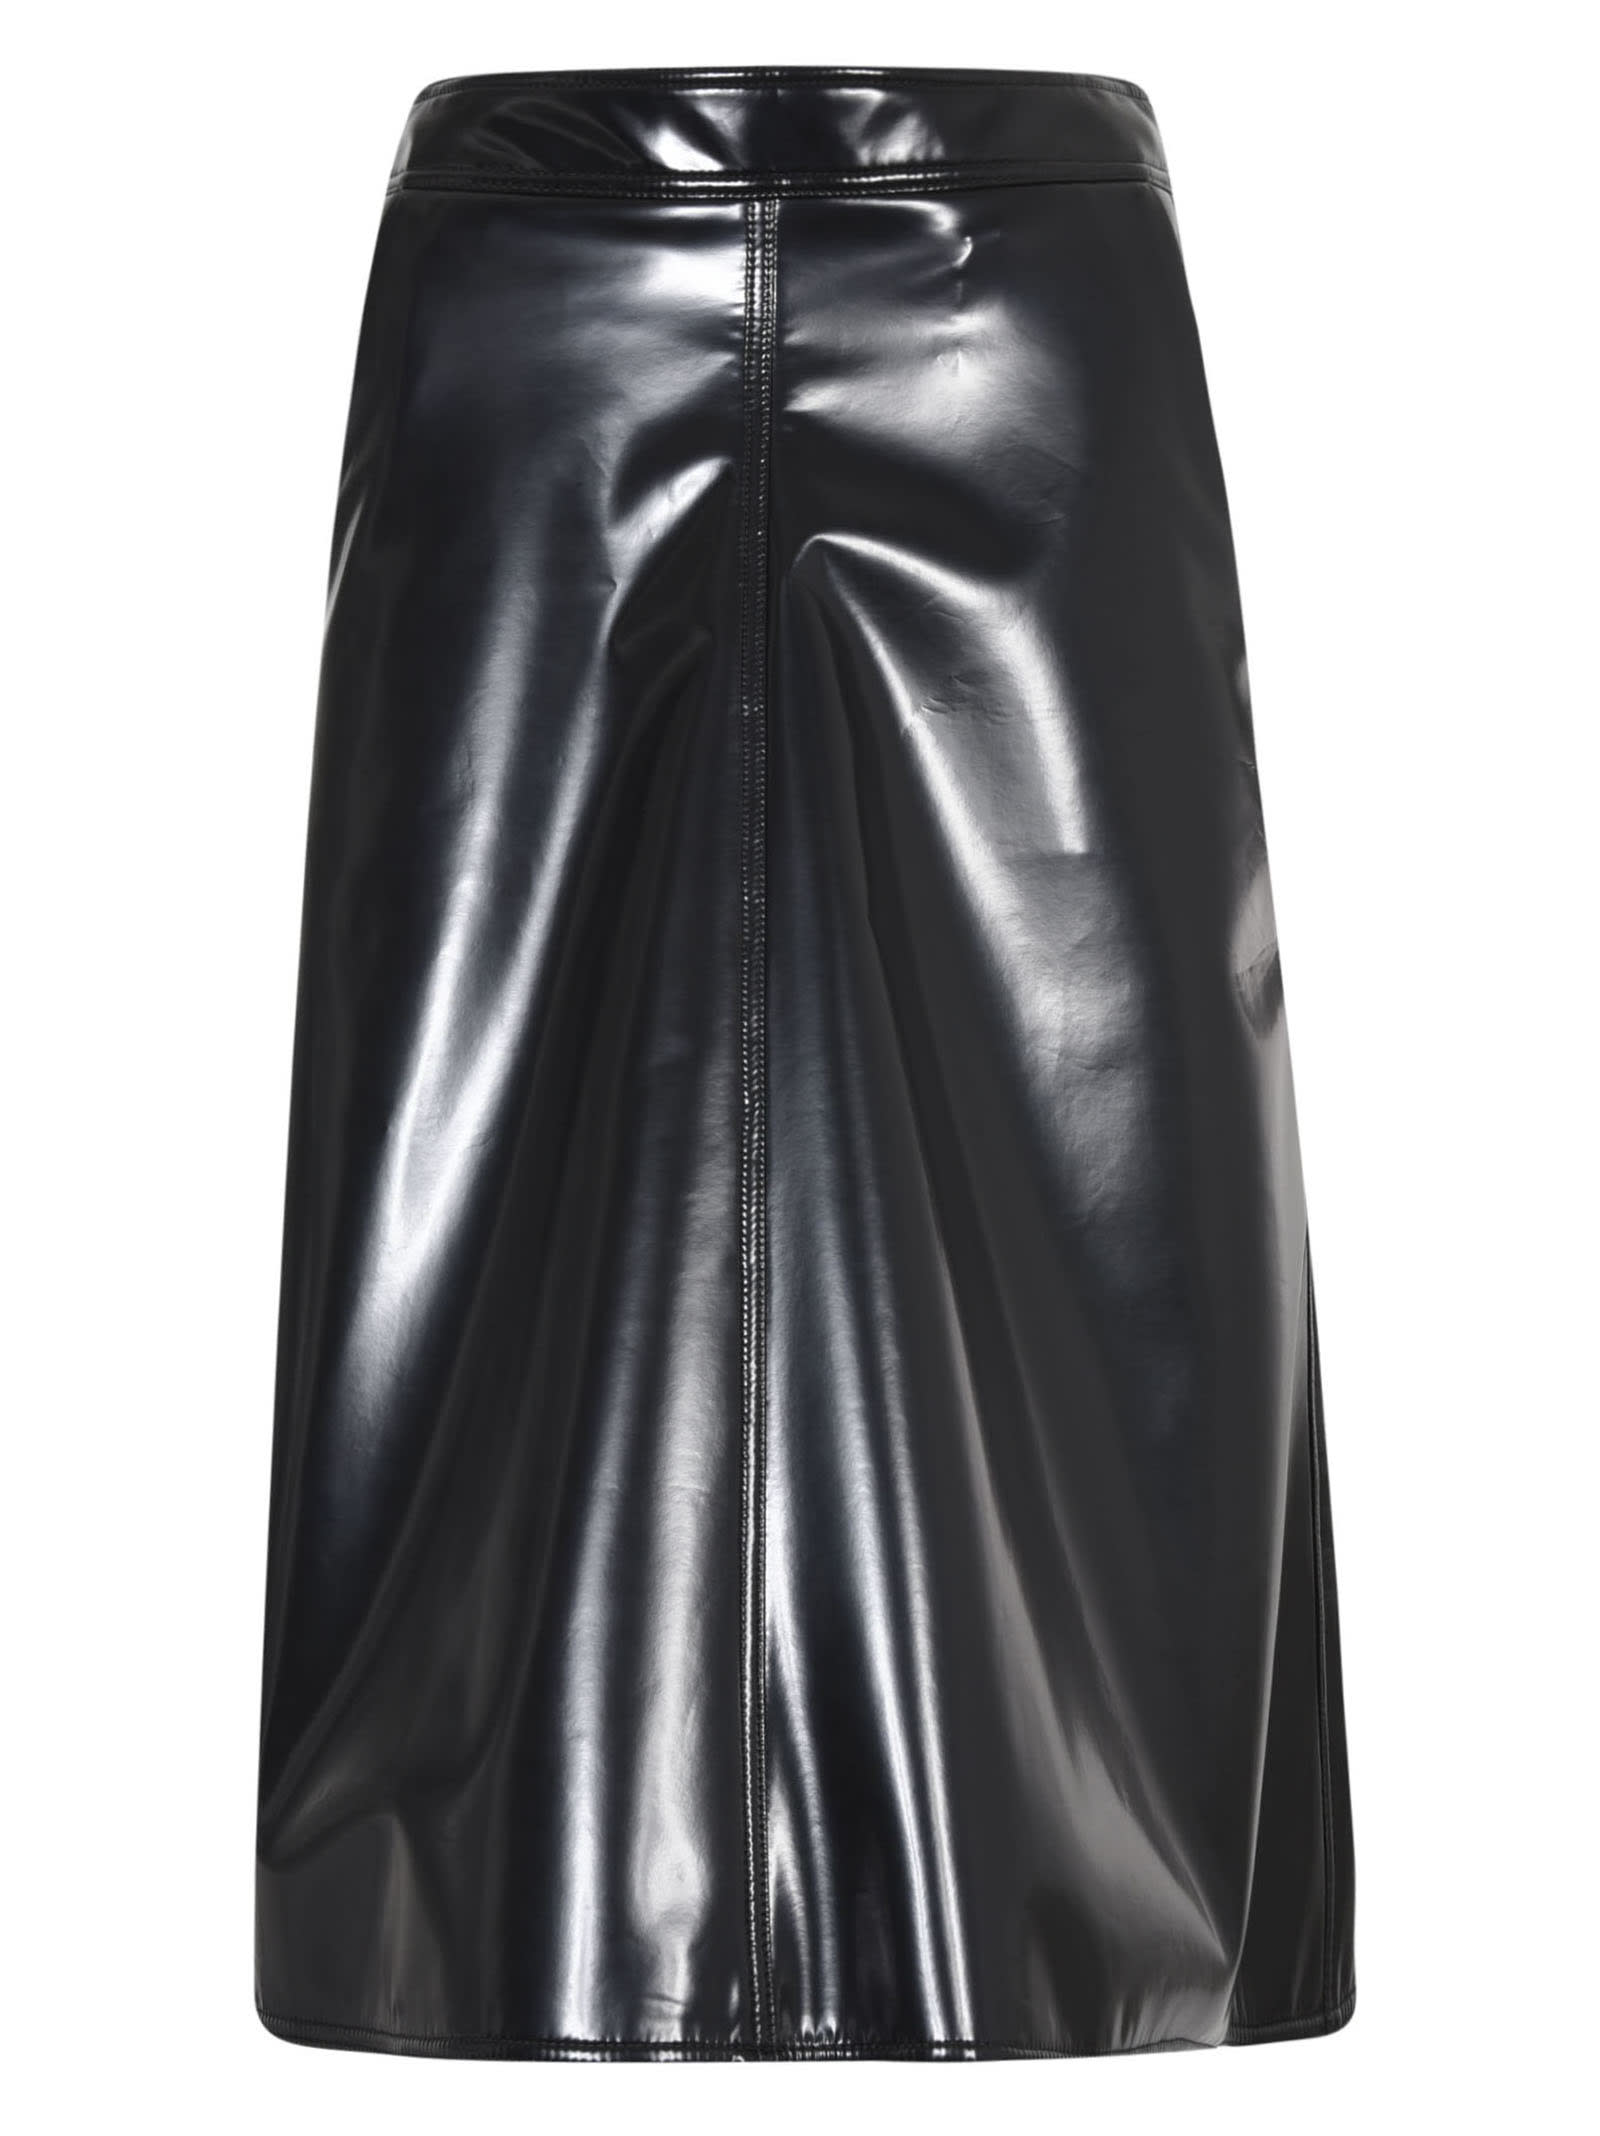 Moncler Genius Rear Zip Shiny Skirt